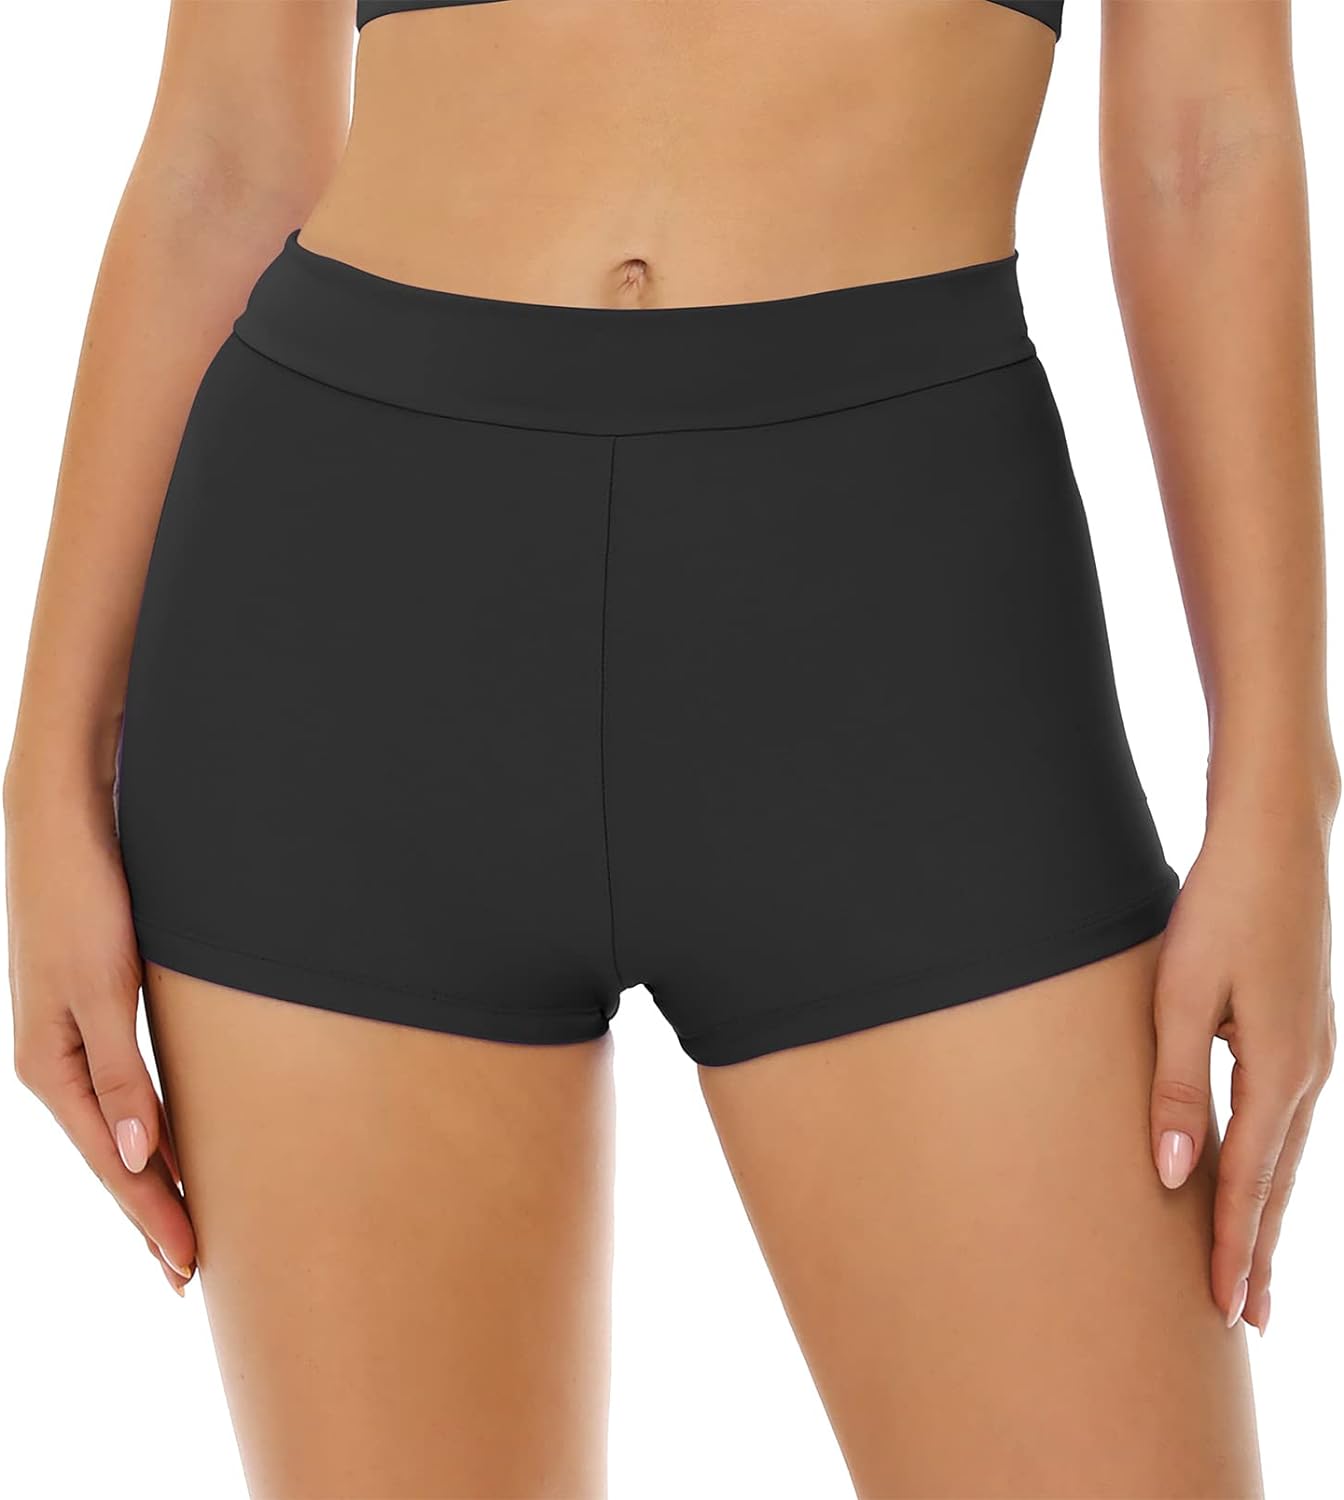 YgneeDom Womens High Waisted Boy Shorts Swim Bottoms Full Coverage Bikini Tankini Boyleg Swimsuit Bottom for Women